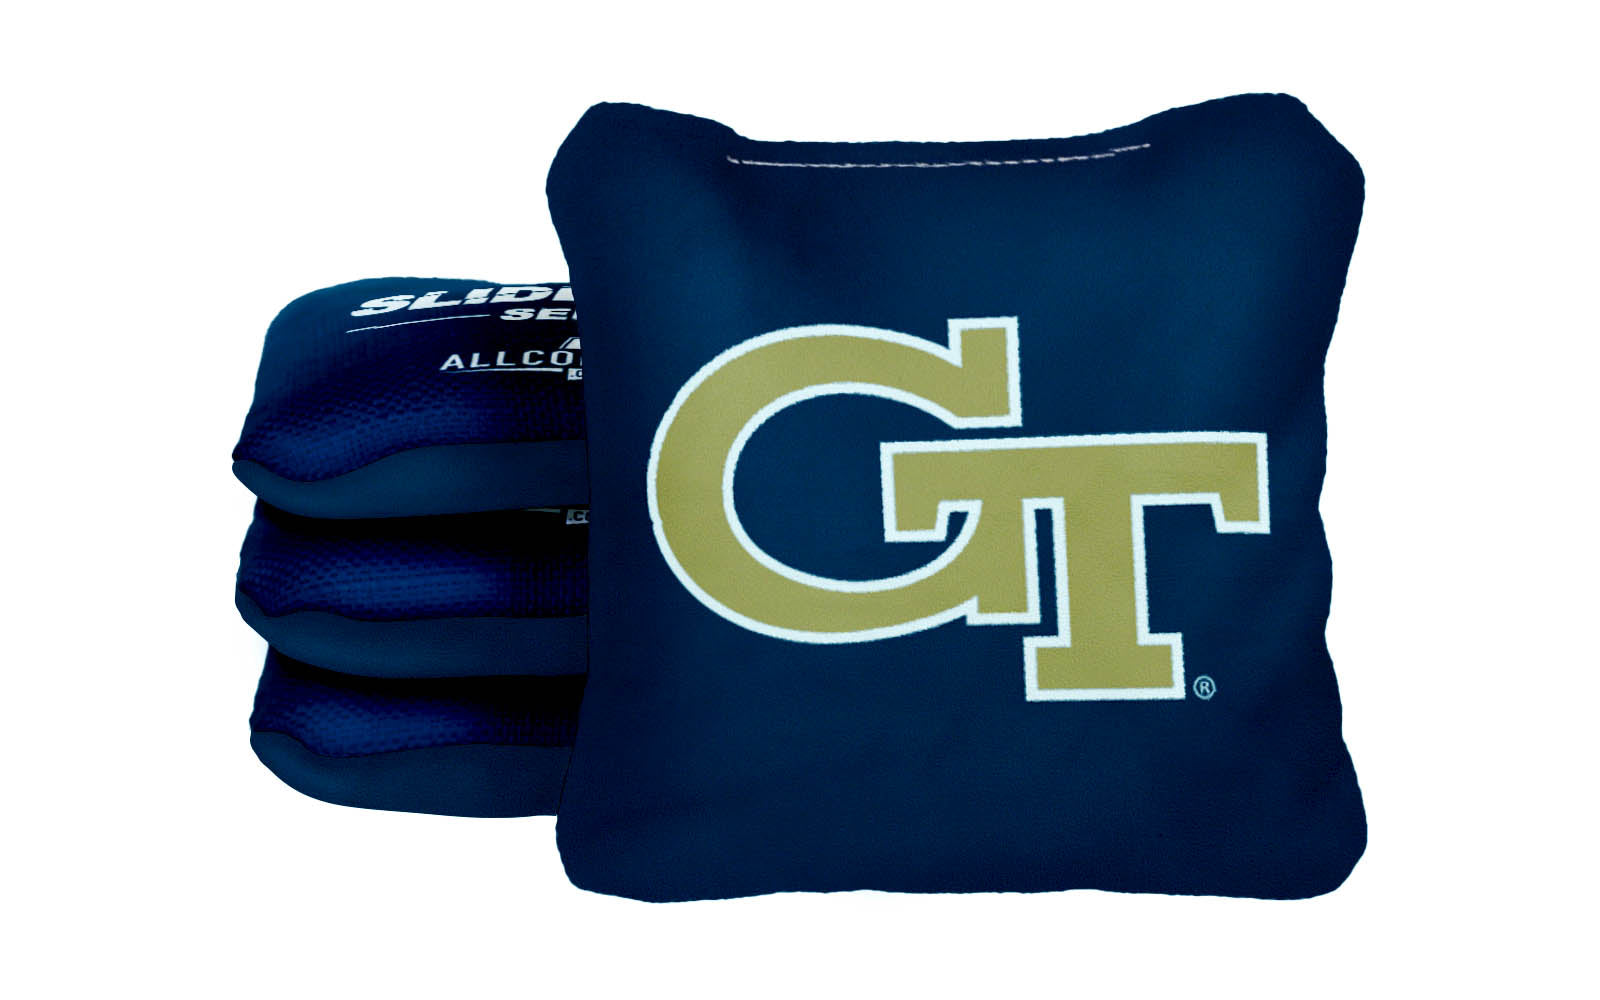 Officially Licensed Collegiate Cornhole Bags - Slide Rite - Set of 4 - Georgia Tech University